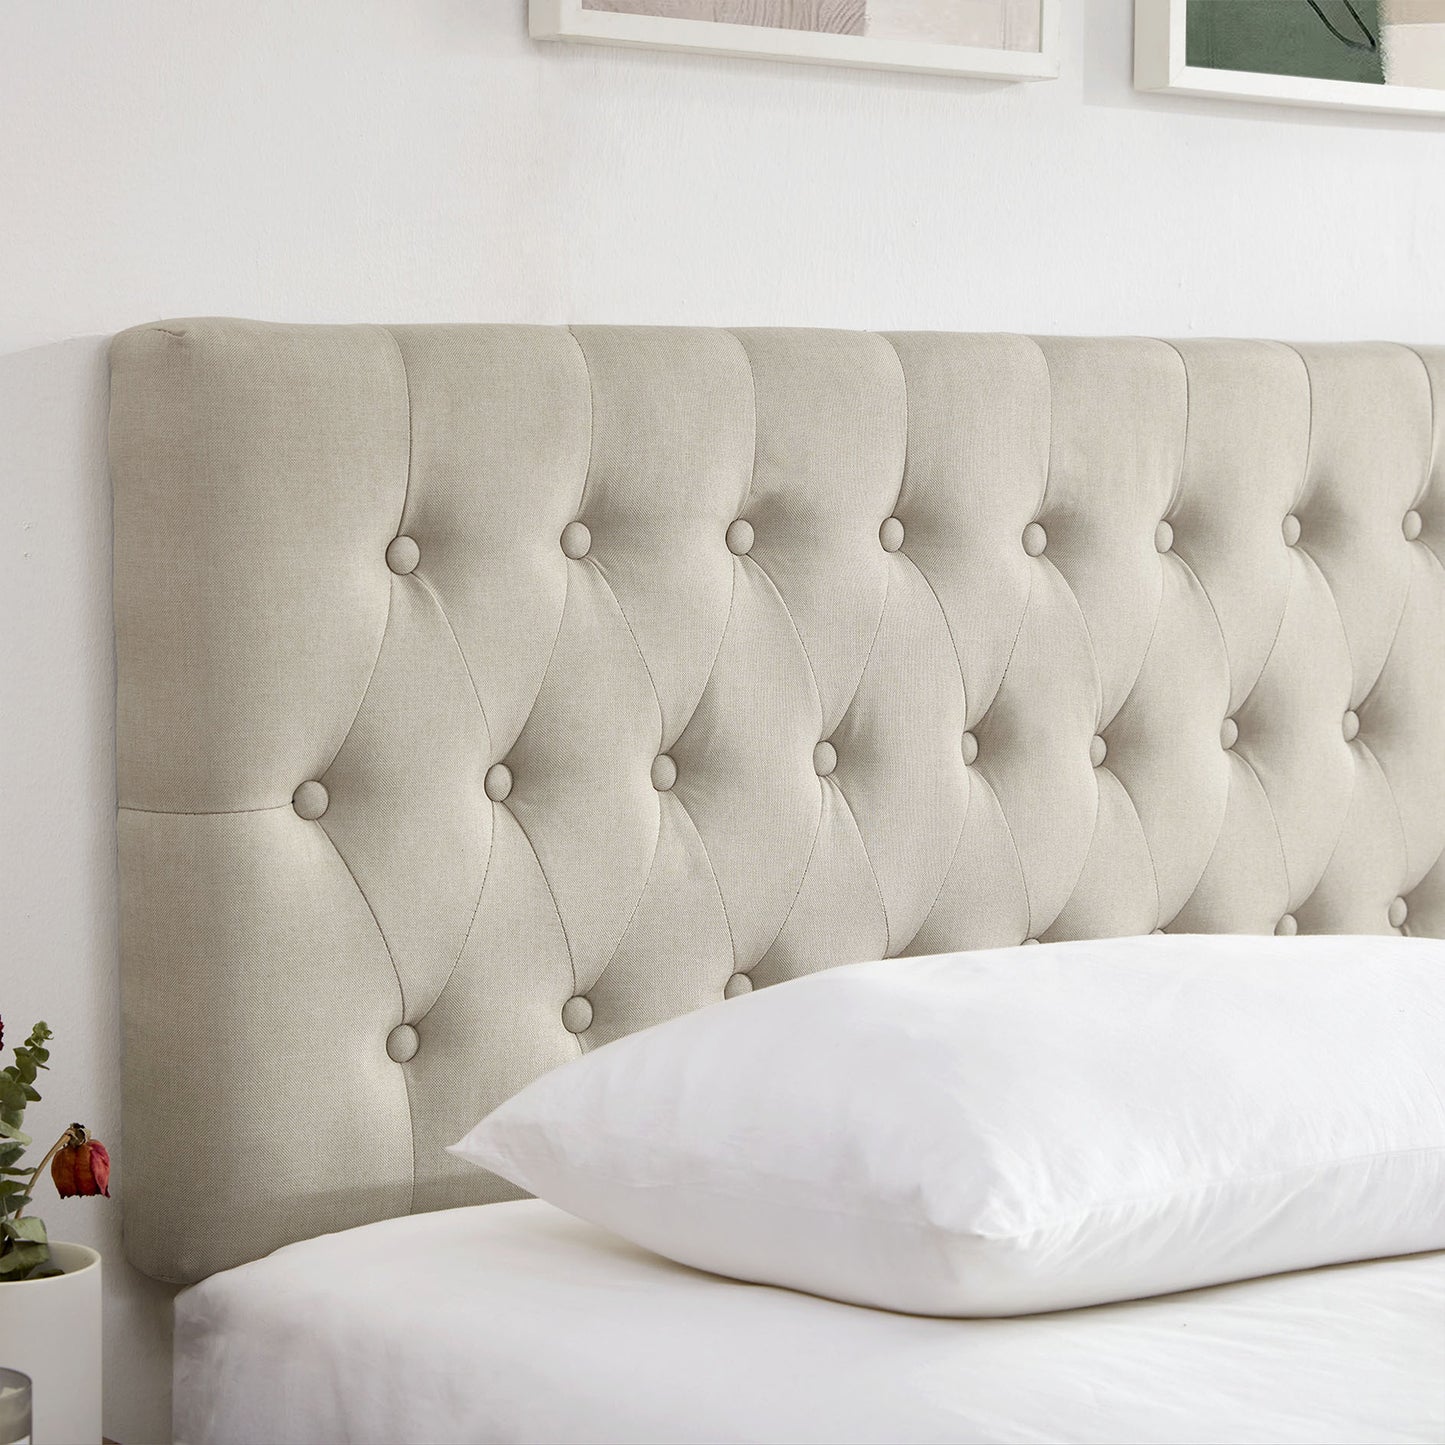 Tufted Upholstered Queen Size Bed Headboard in Modern Button Design, Adjustable Solid Wood Head Board, Premium Linen Fabric Padded Headboards in Bedroom (Beige, Queen)